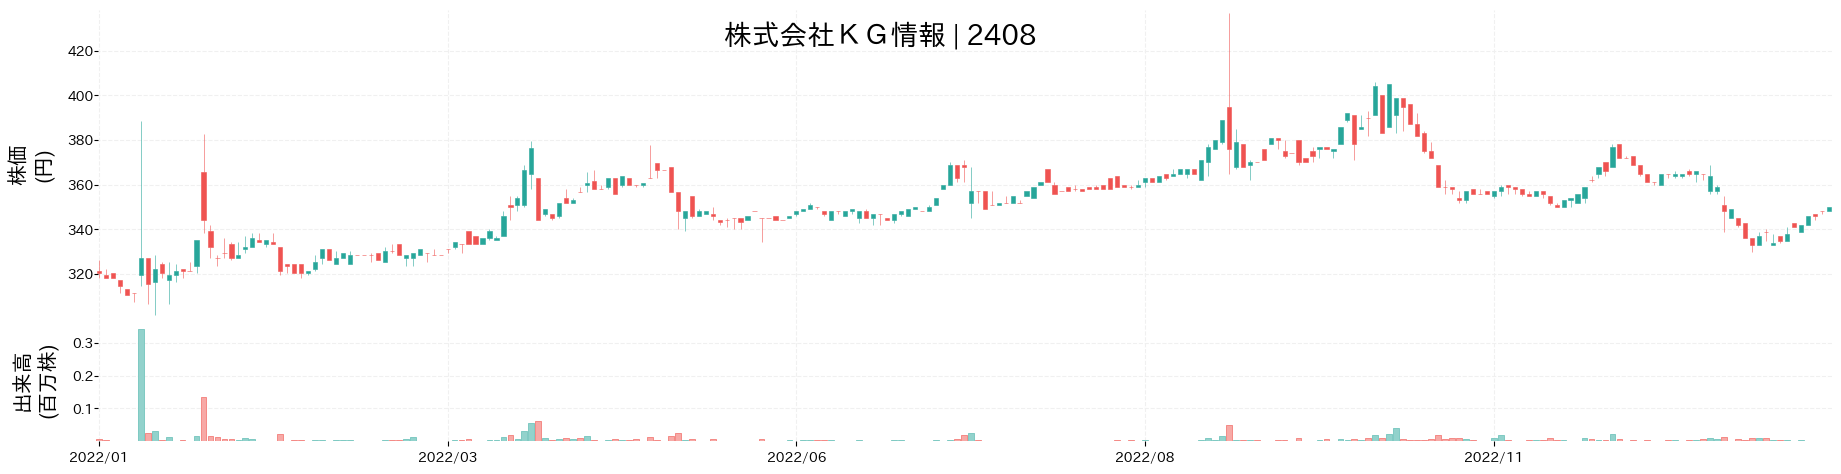 KG情報の株価推移(2022)